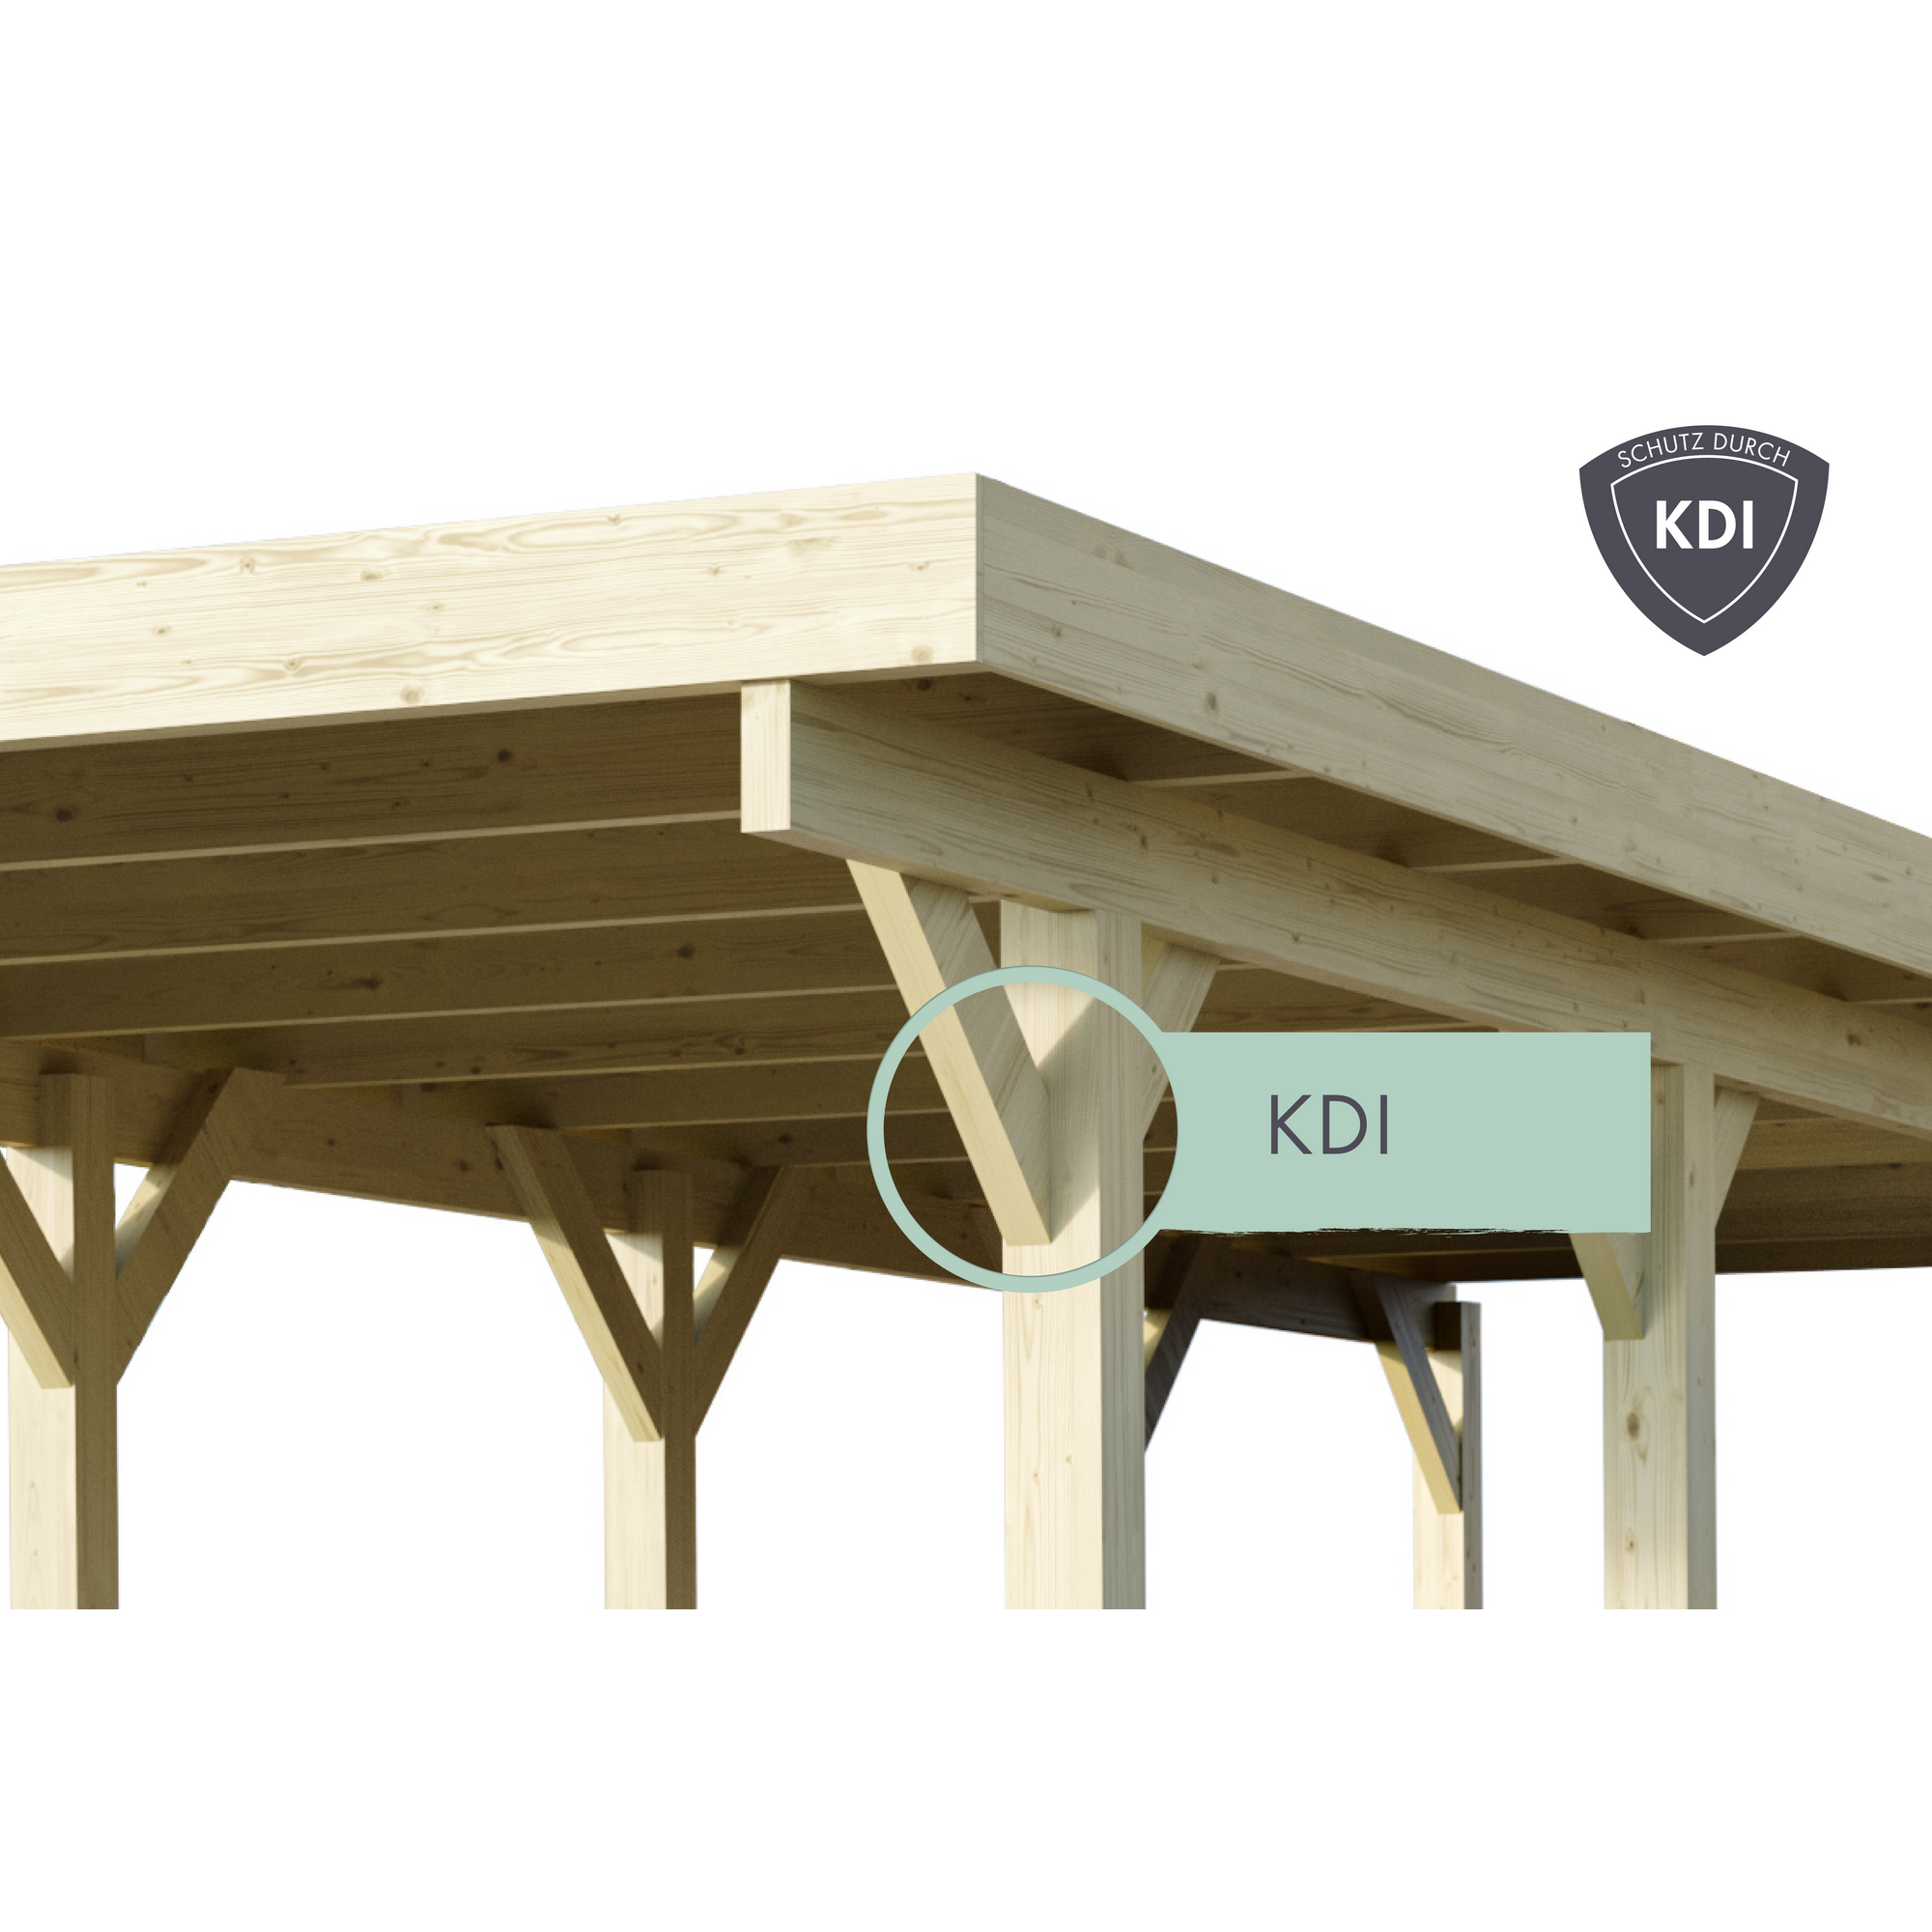 Doppelcarport 'Carlos 1' Kiefer PVC-Dach mit einem Einfahrtsbogen 480 x 598 x 237 cm + product picture